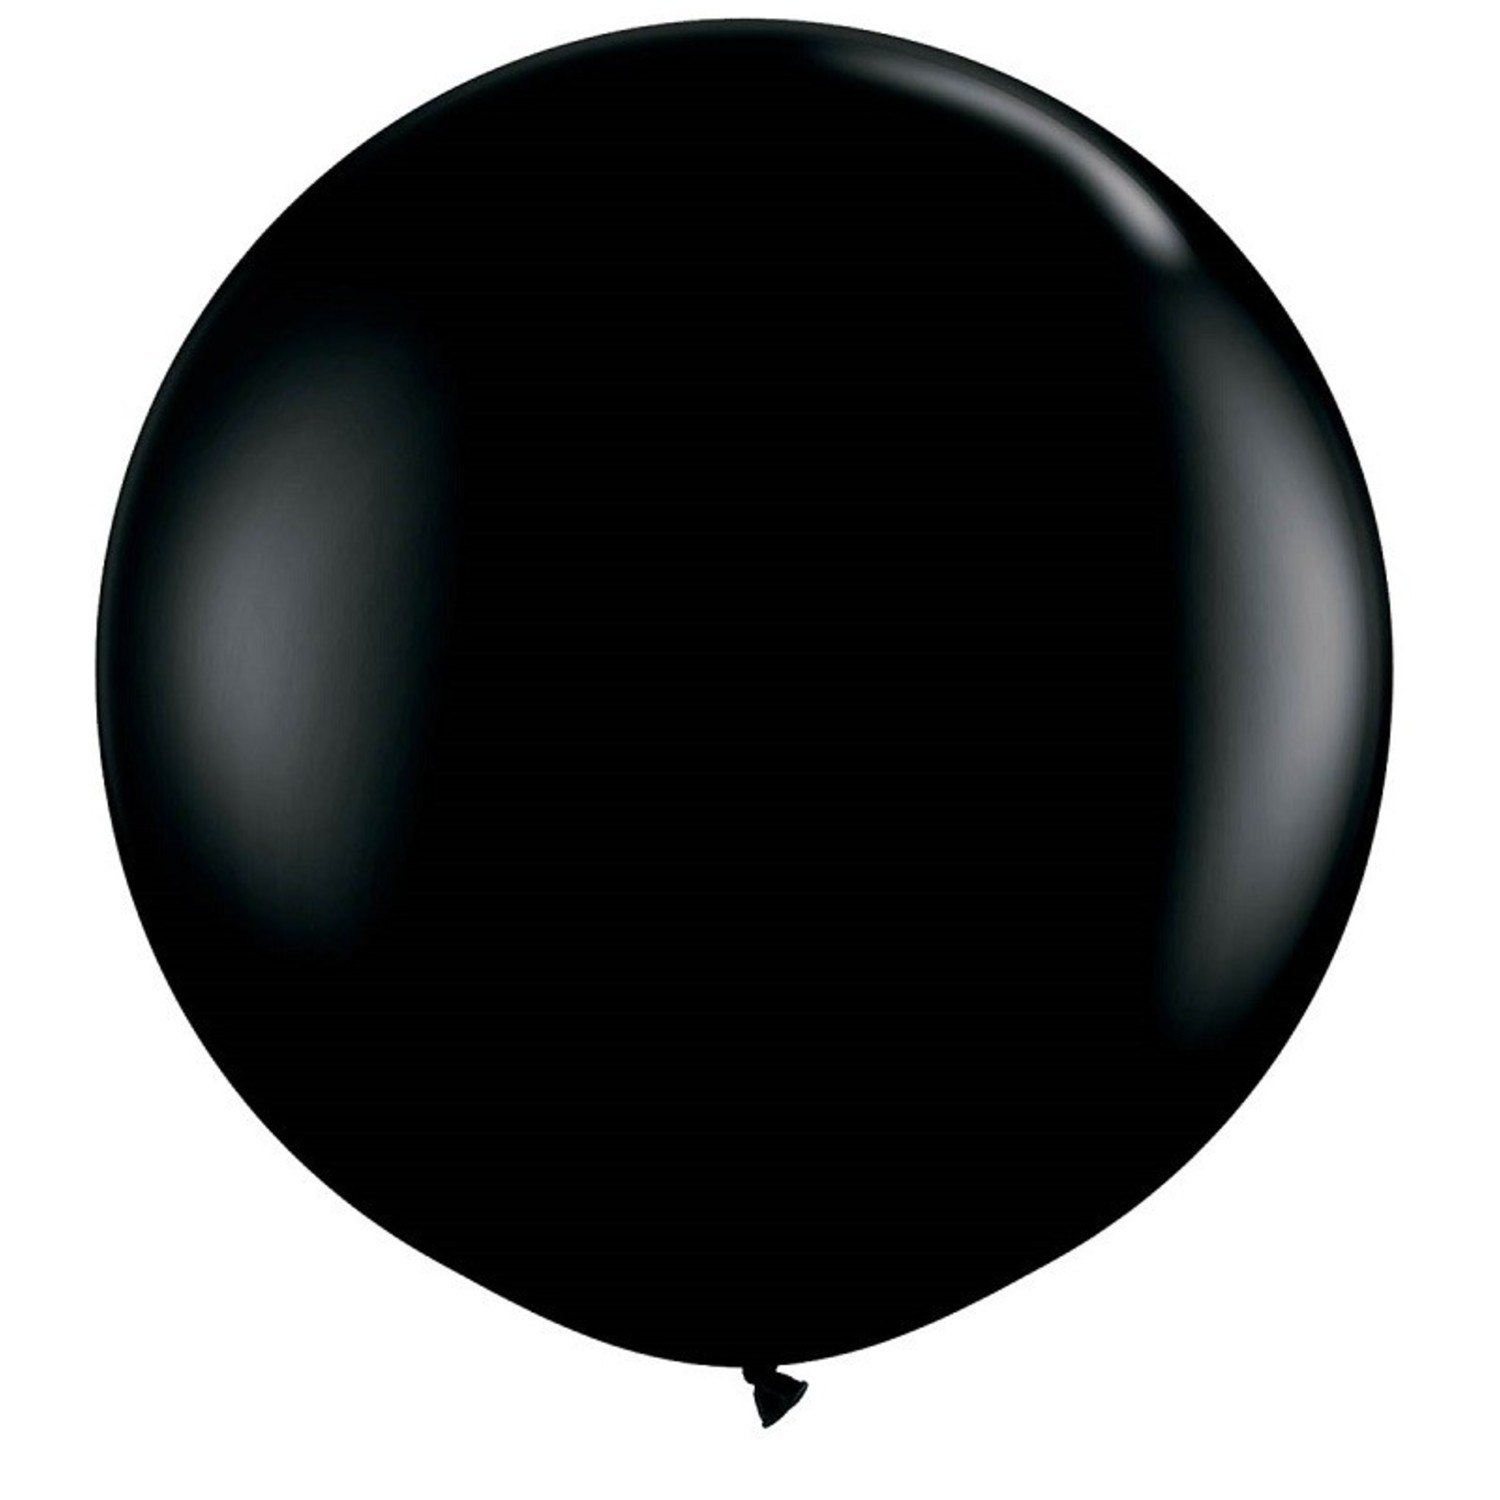 Missie bedelaar Schipbreuk Zwarte Ballonnen kopen bij Tuf-Tuf? Snelle levering | Tuf-Tuf Nederland